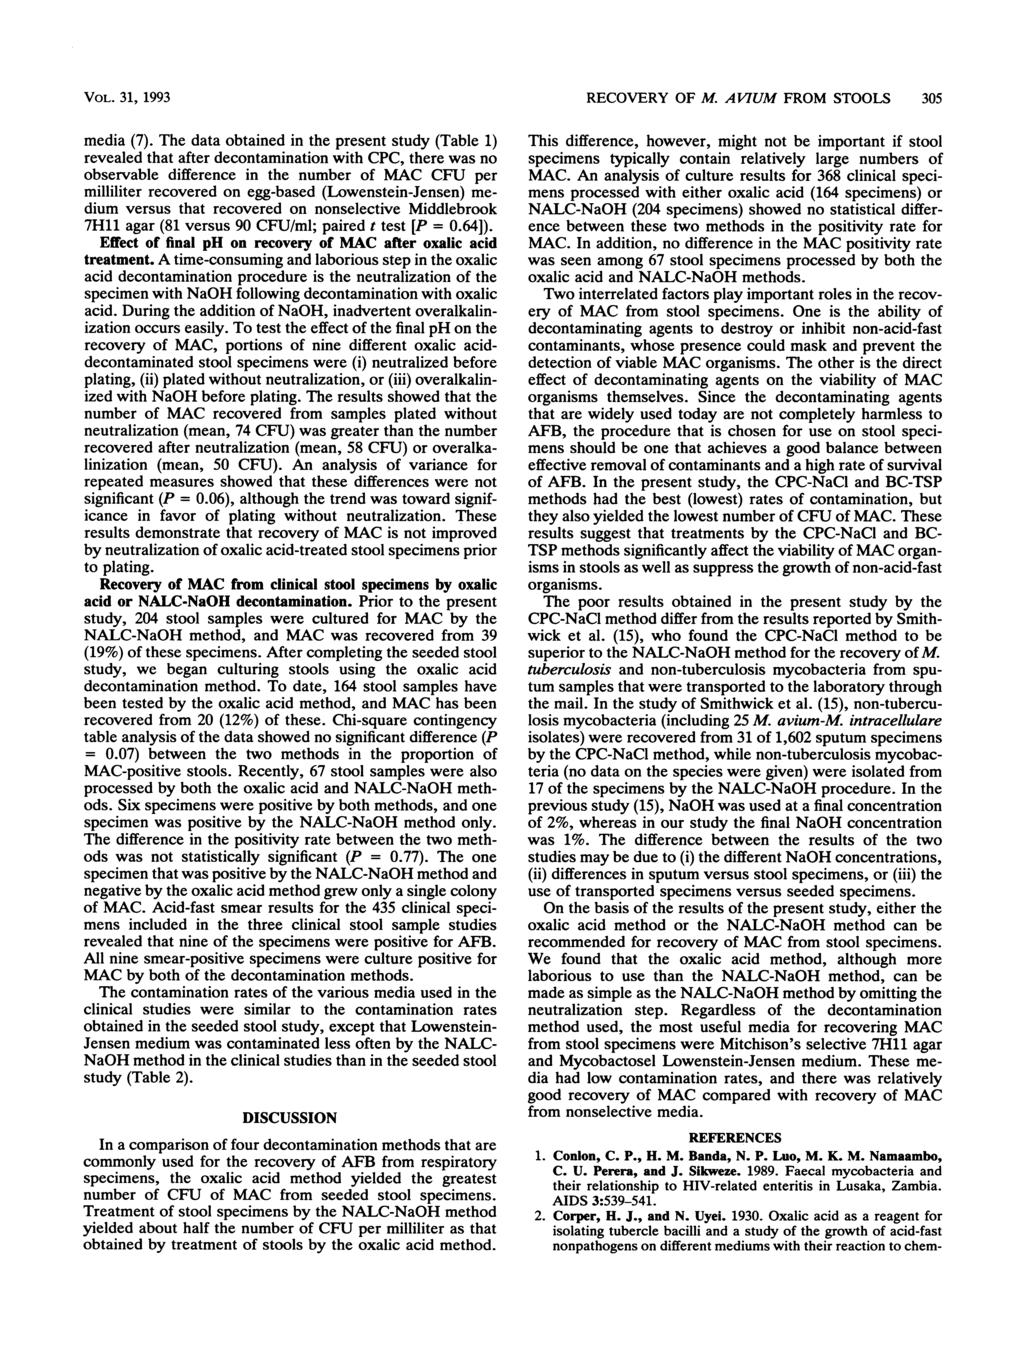 VOL. 31, 1993 media (7).